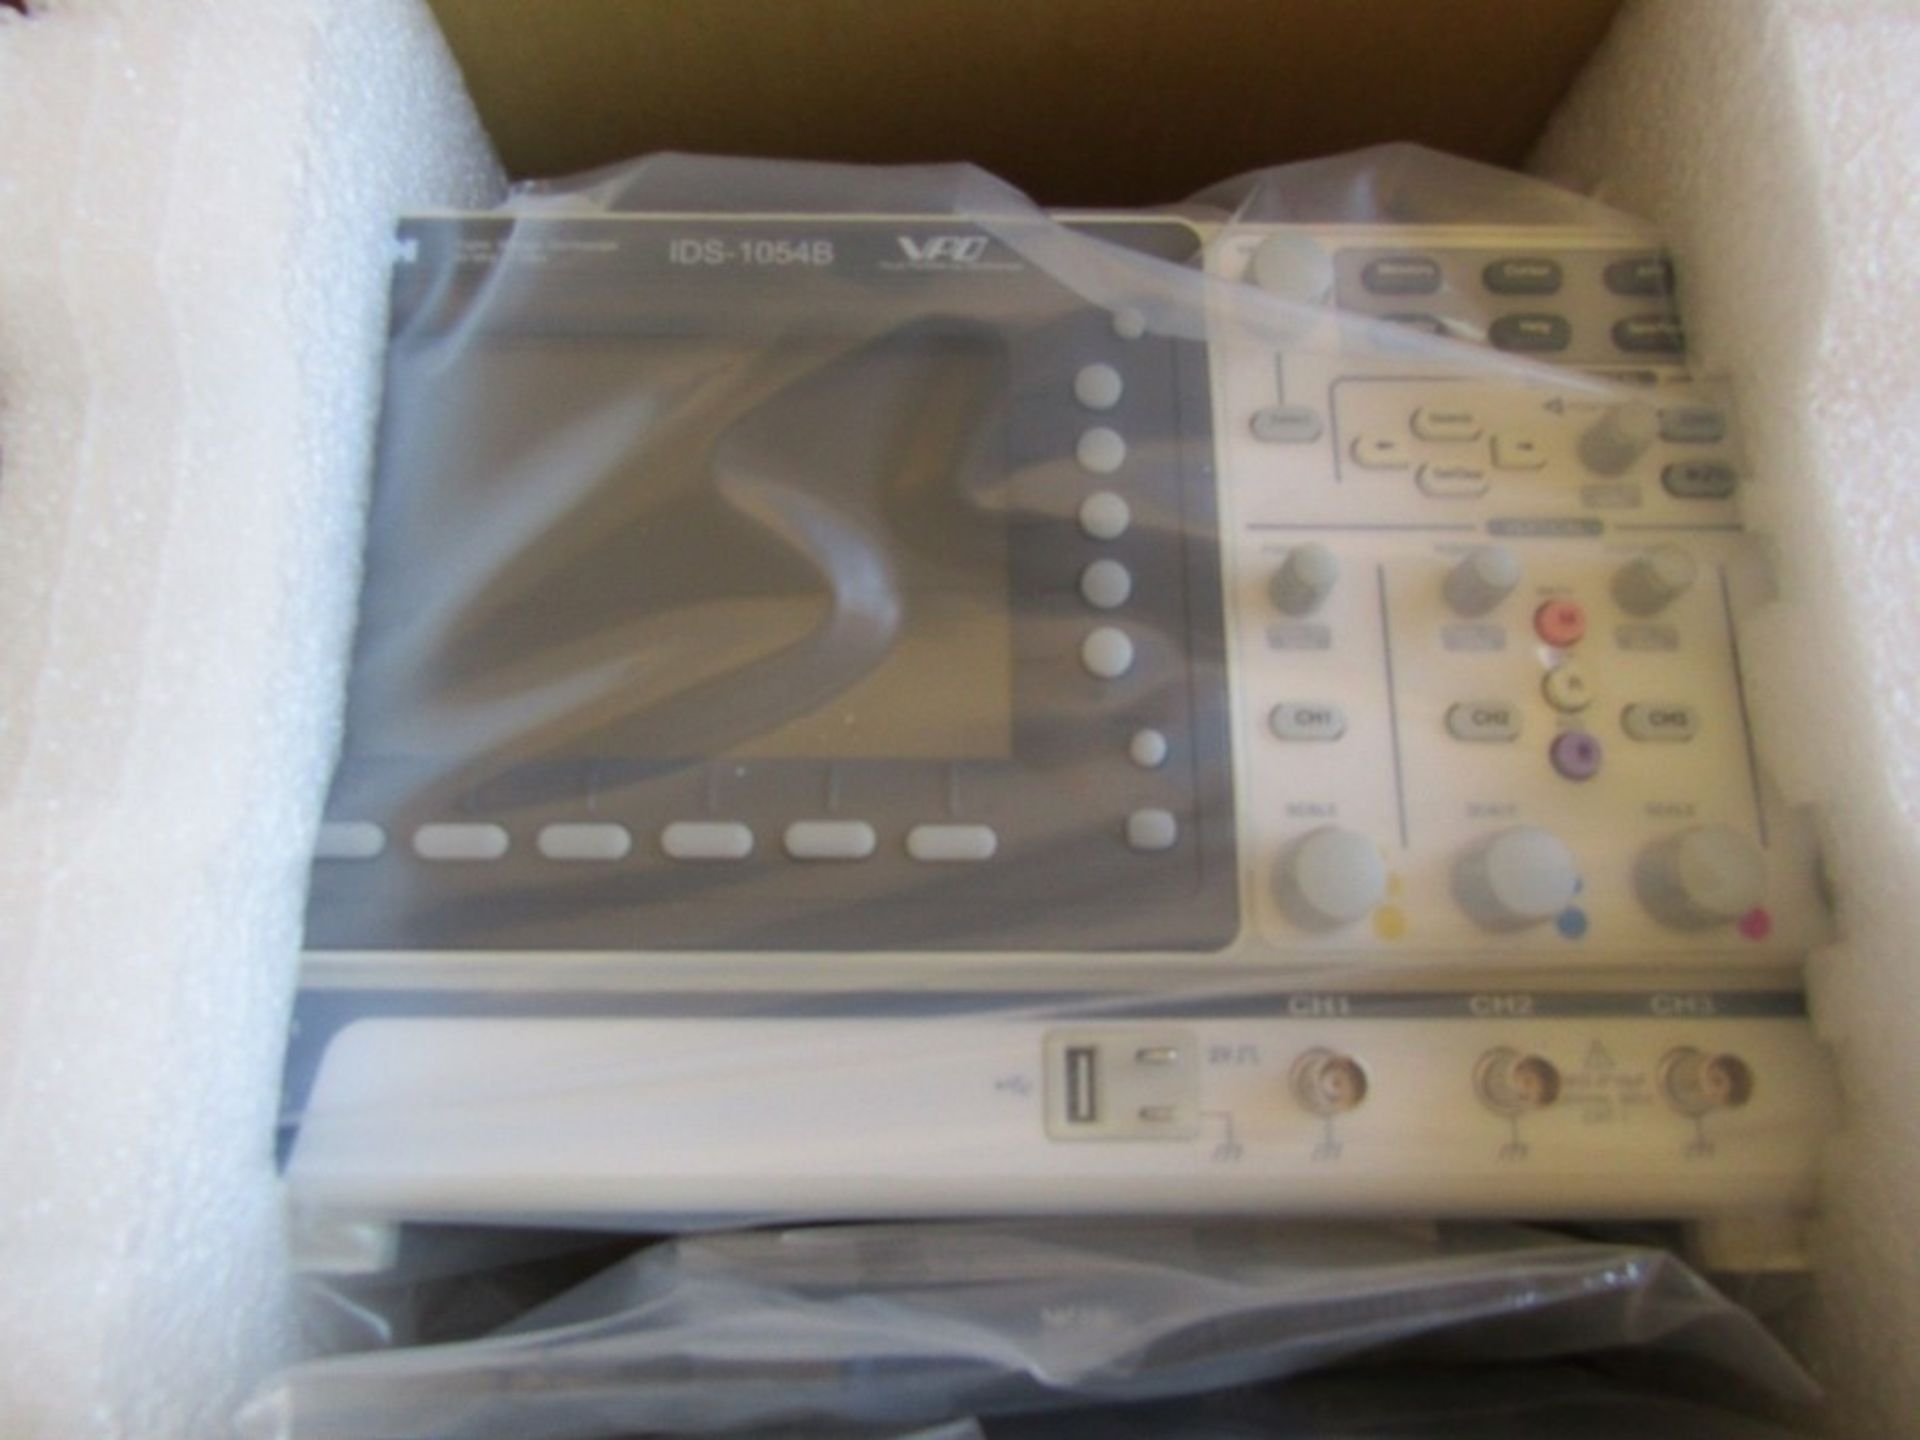 ISO-TECH IDS-1054B DSO Digital Oscilloscope, 4 Channels, 50MHz J13 8840714